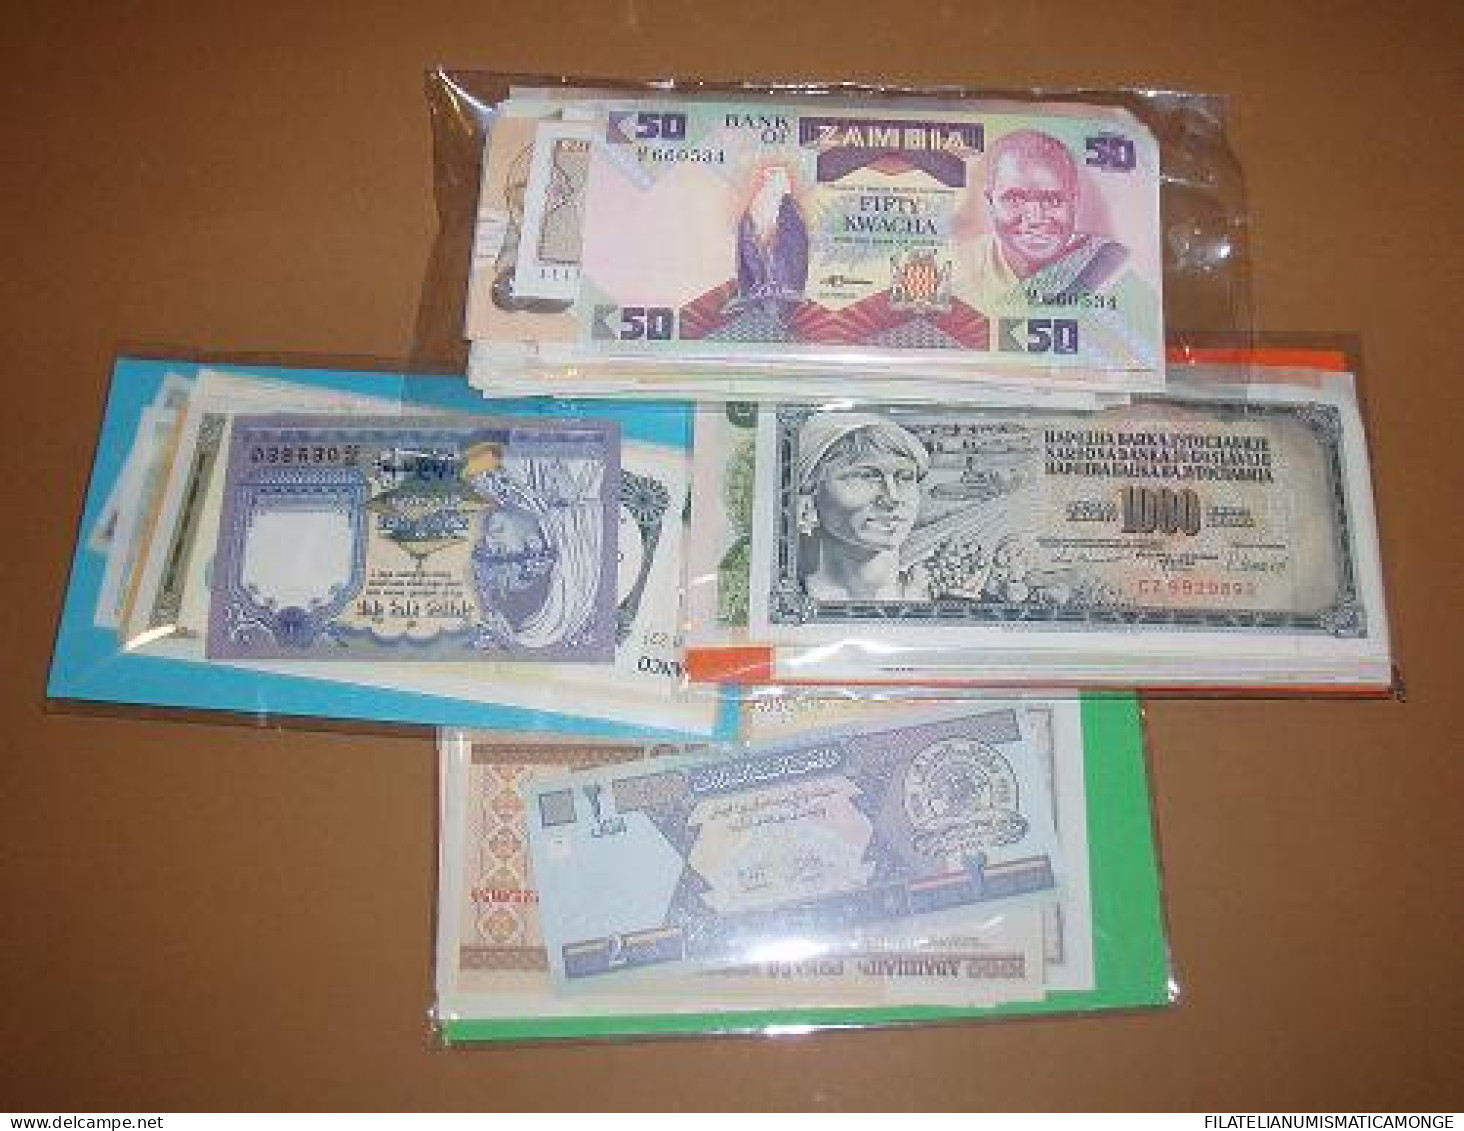  Offer - Lot Banknotes - Paqueteria  Mundial 150 Billetes Diferentes / Foto Gen - Vrac - Billets